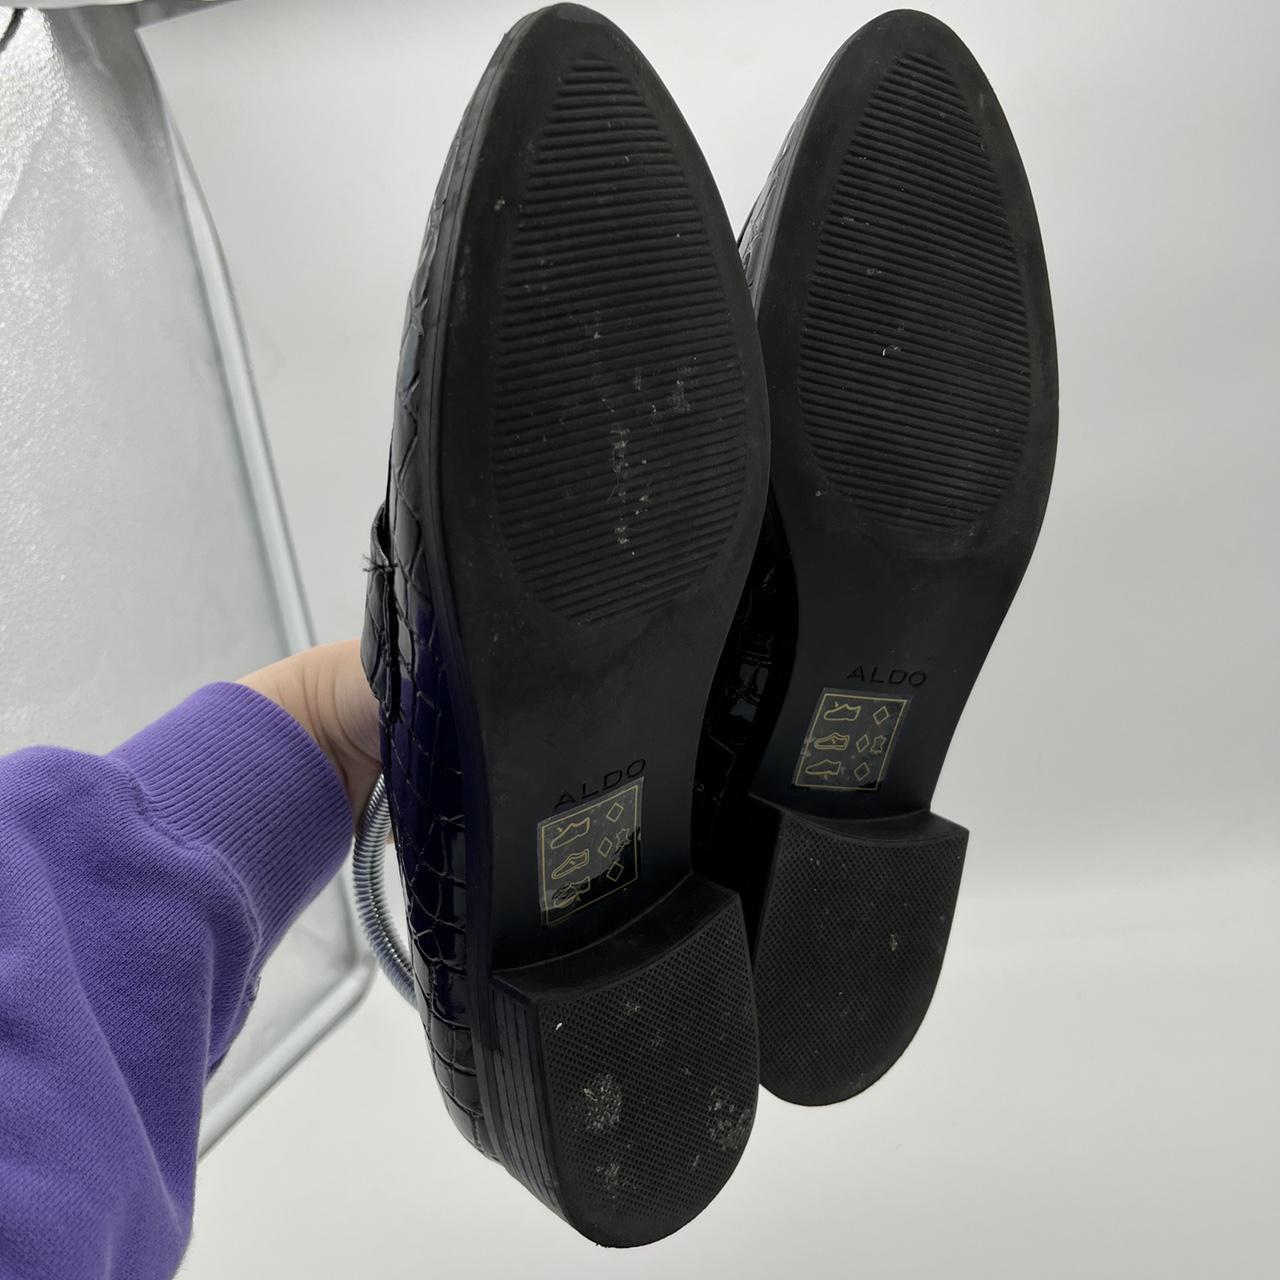 Product Image 3 - Black Loafers

•Women’s ALDO Black Reptile